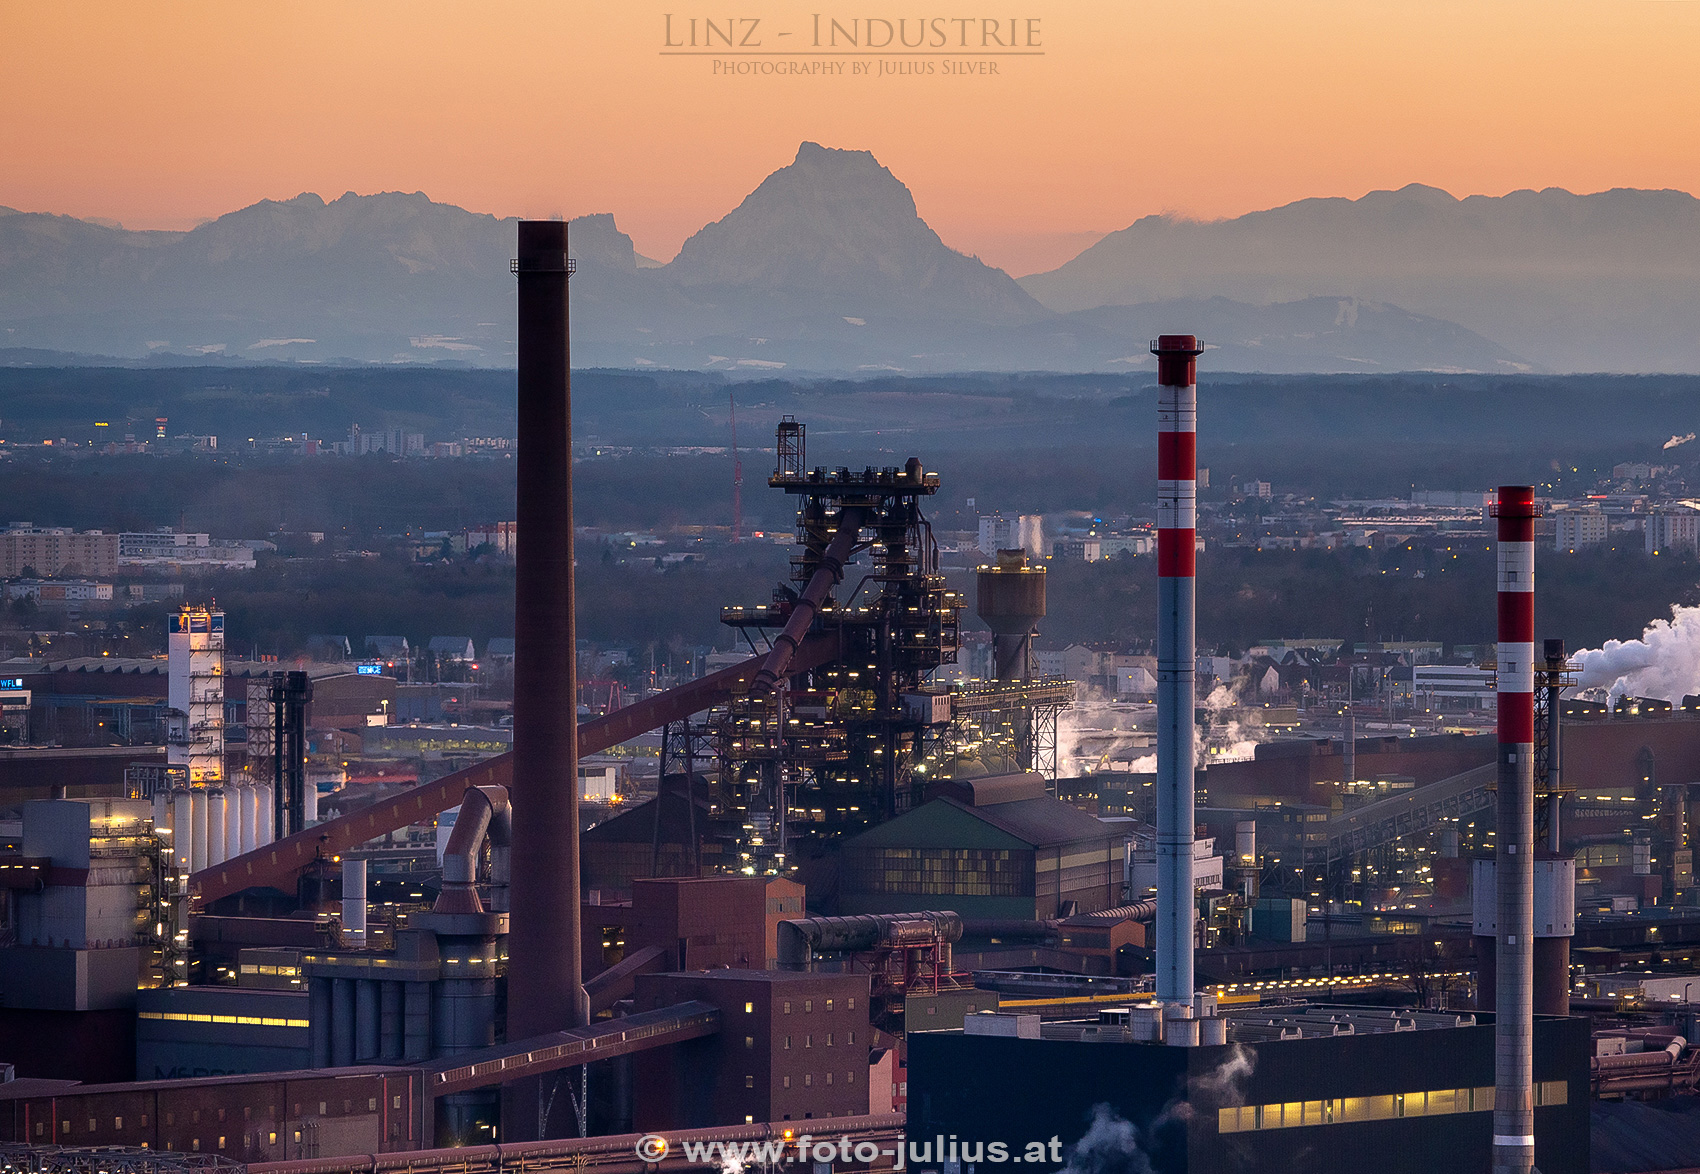 Linz_185a_Industrie.jpg, 785kB